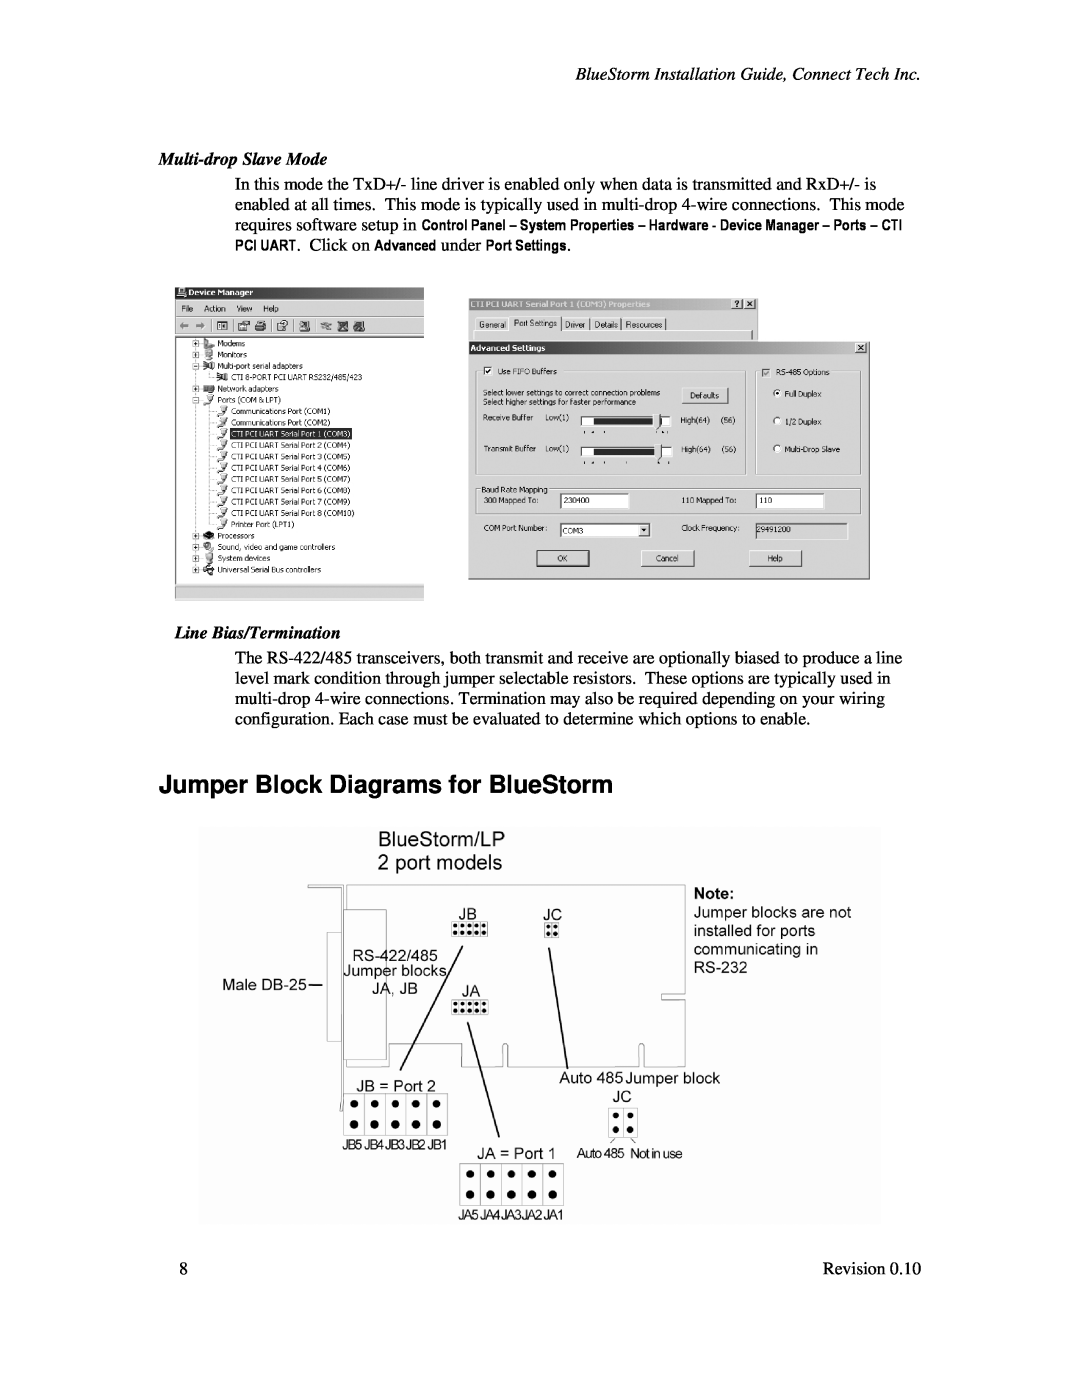 Connect Tech CTIM-00015 user manual Jumper Block Diagrams for BlueStorm, Multi-drop Slave Mode, Line Bias/Termination 